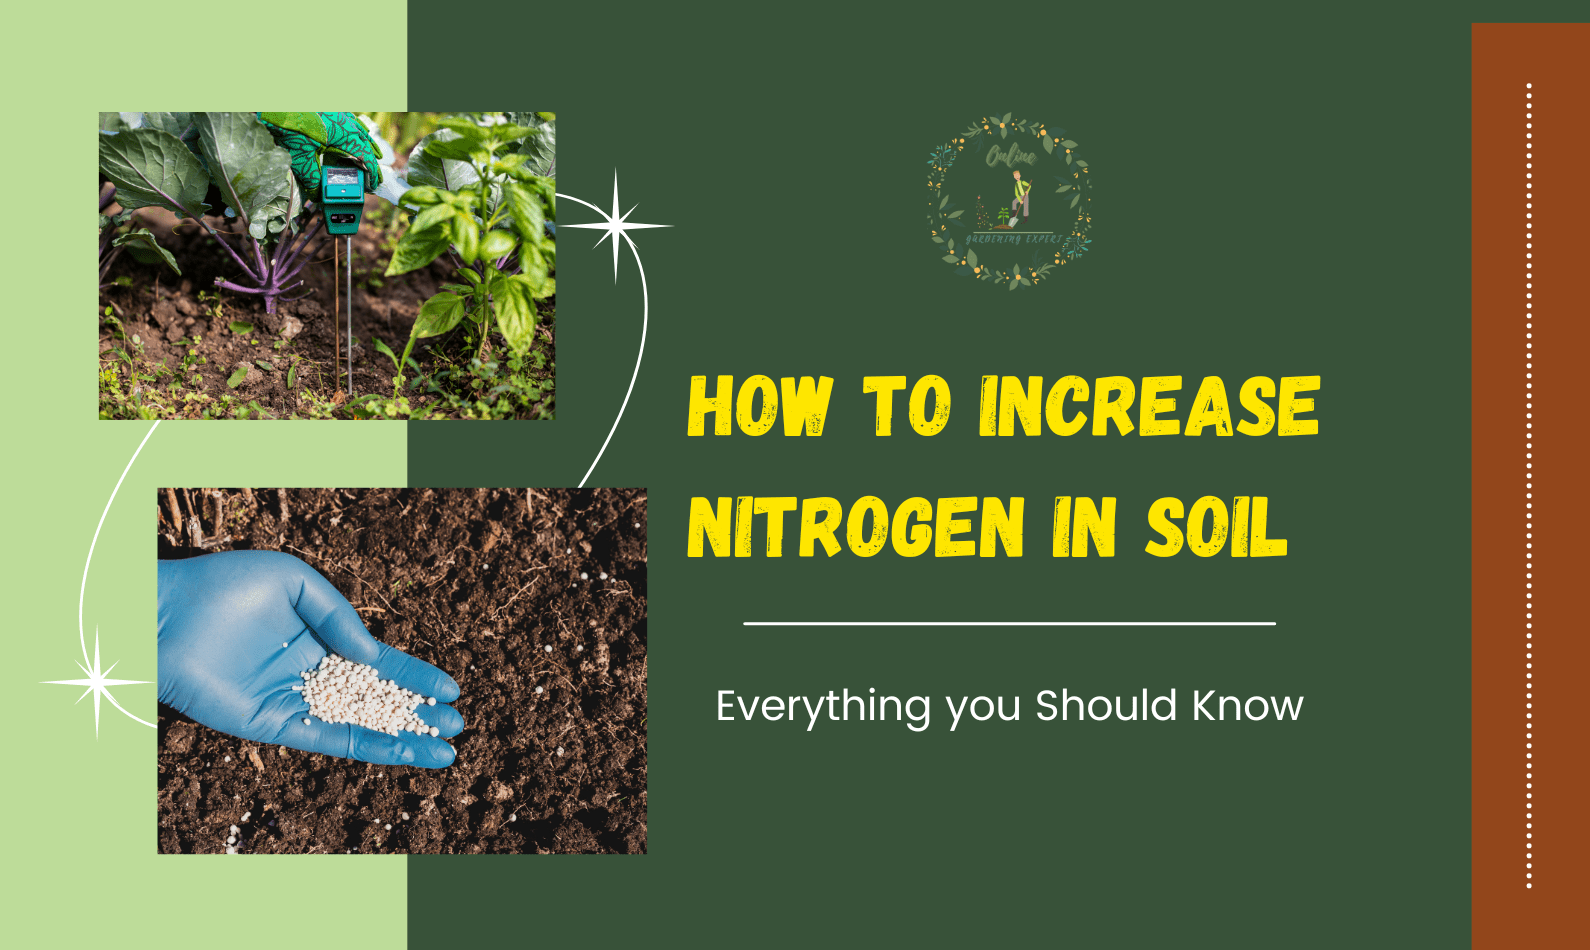 How to Increase Nitrogen in Soil?